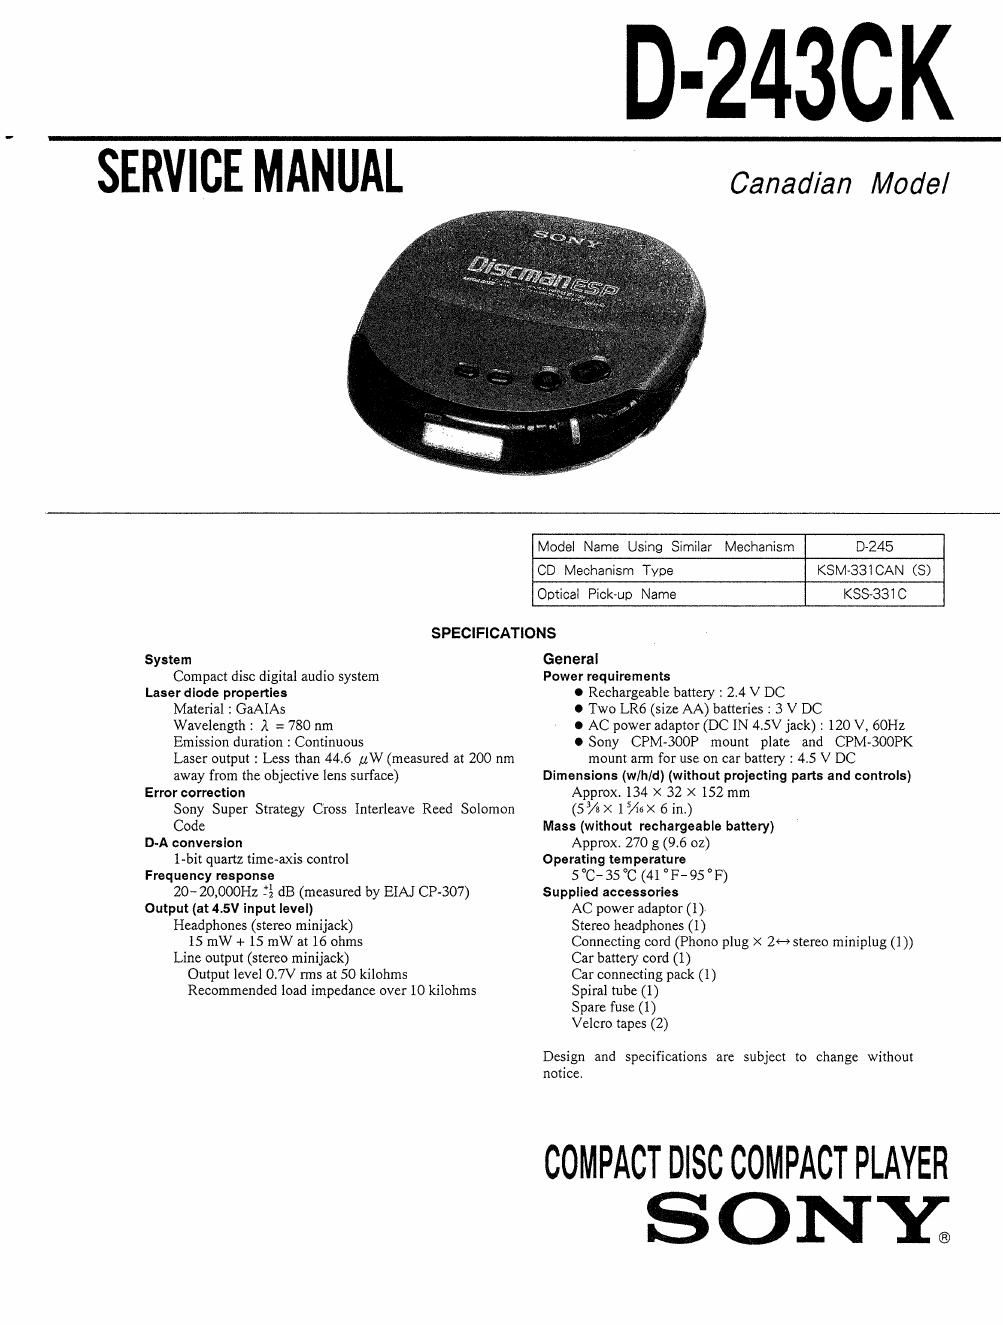 sony d 243 ck service manual